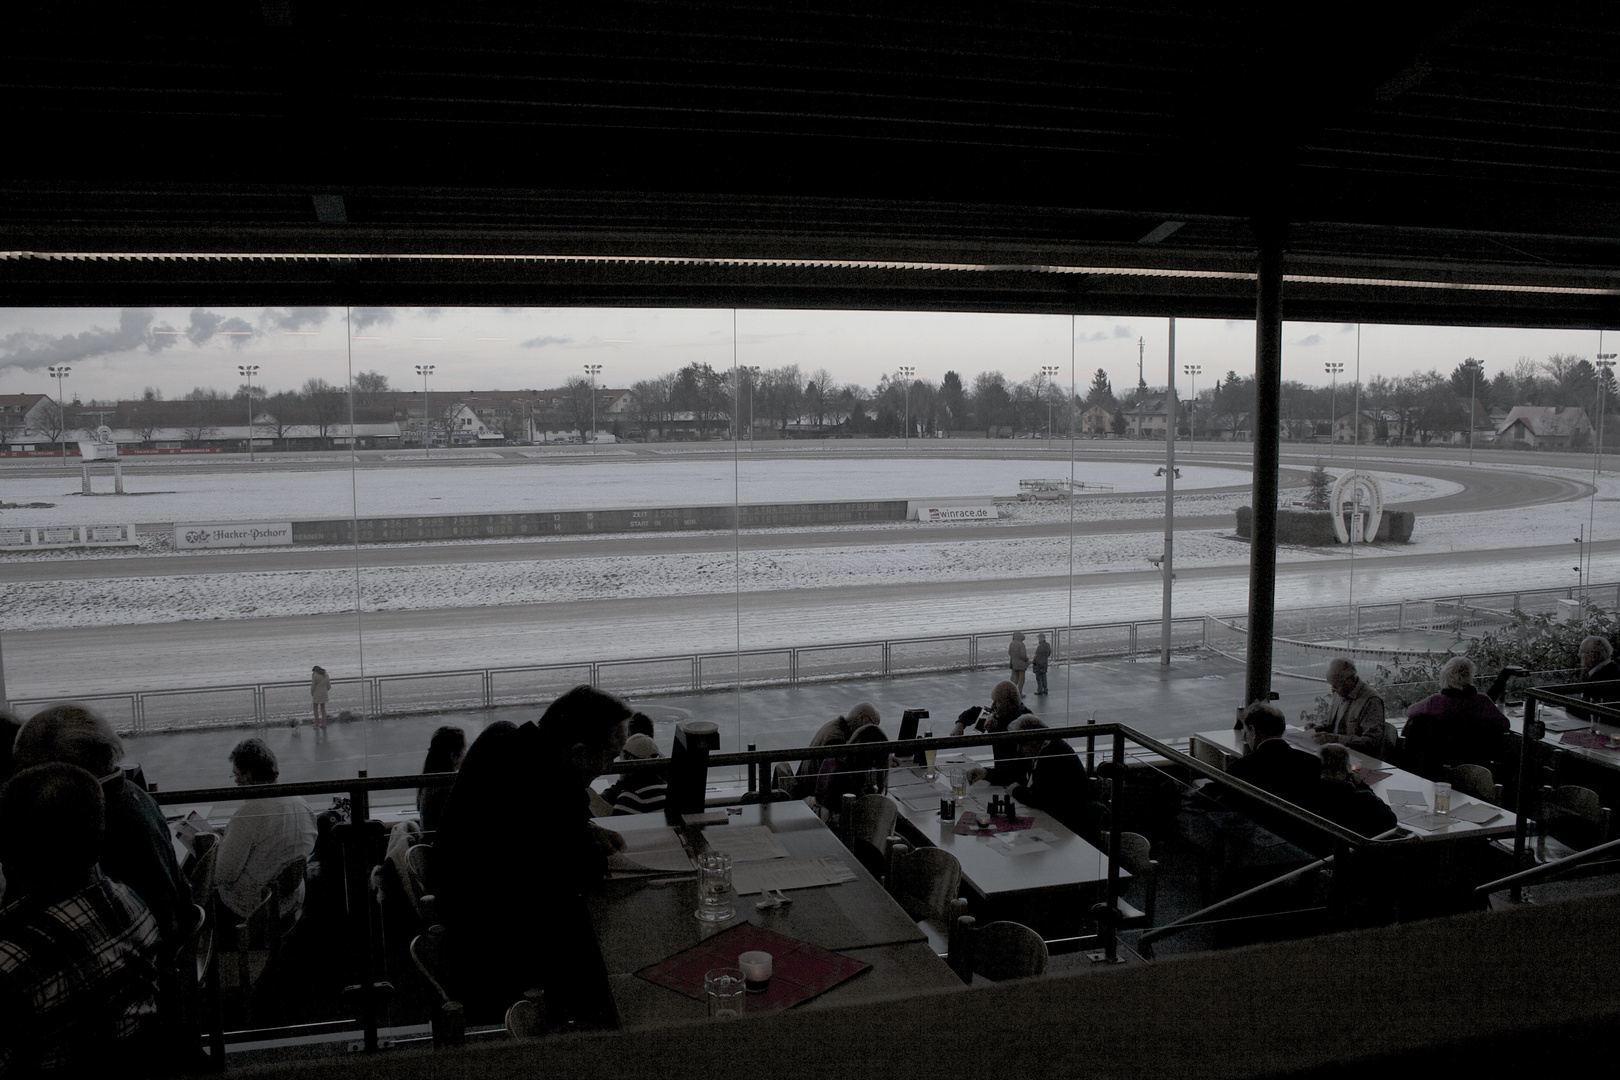 A day at the races - Blick von der Tribüne